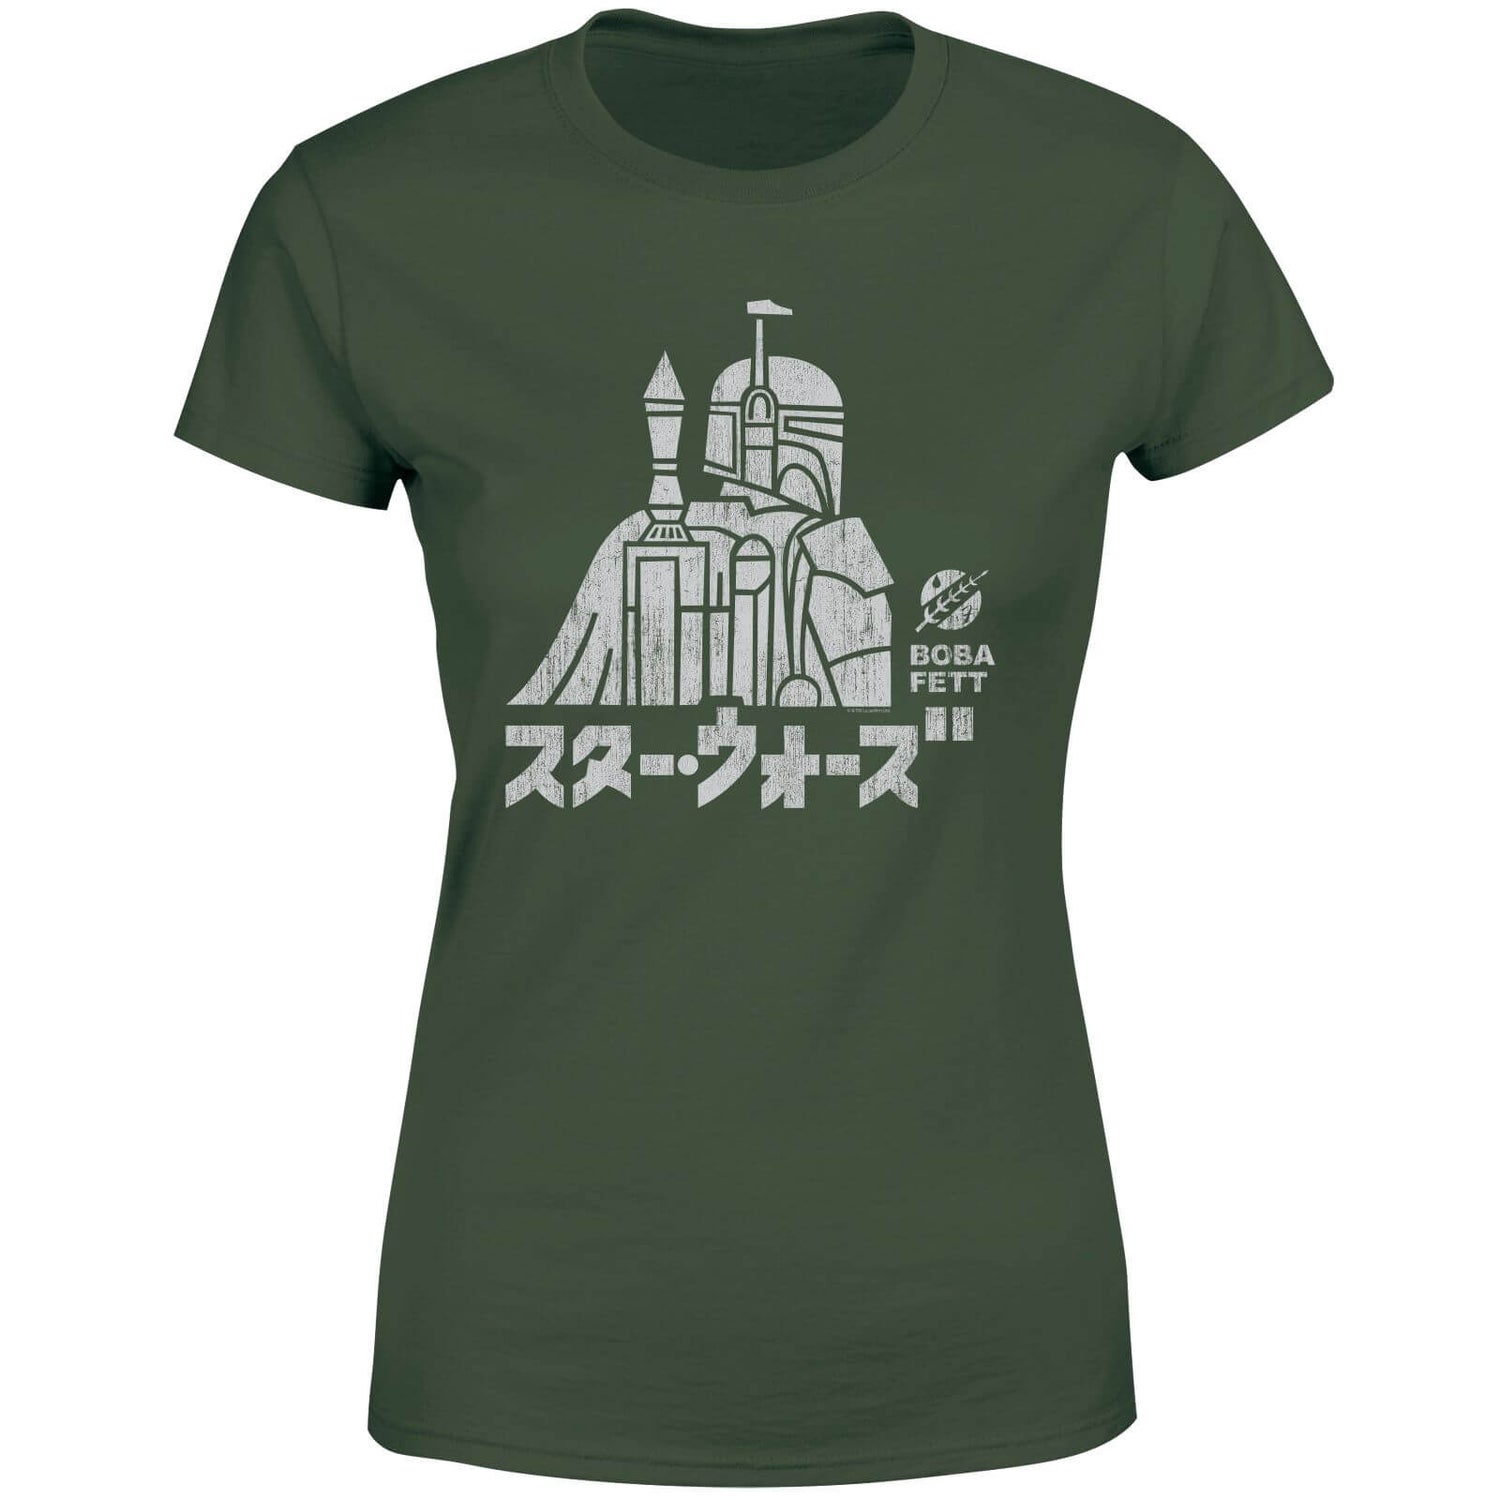 Star Wars Kana Boba Fett Women's T-Shirt - Green